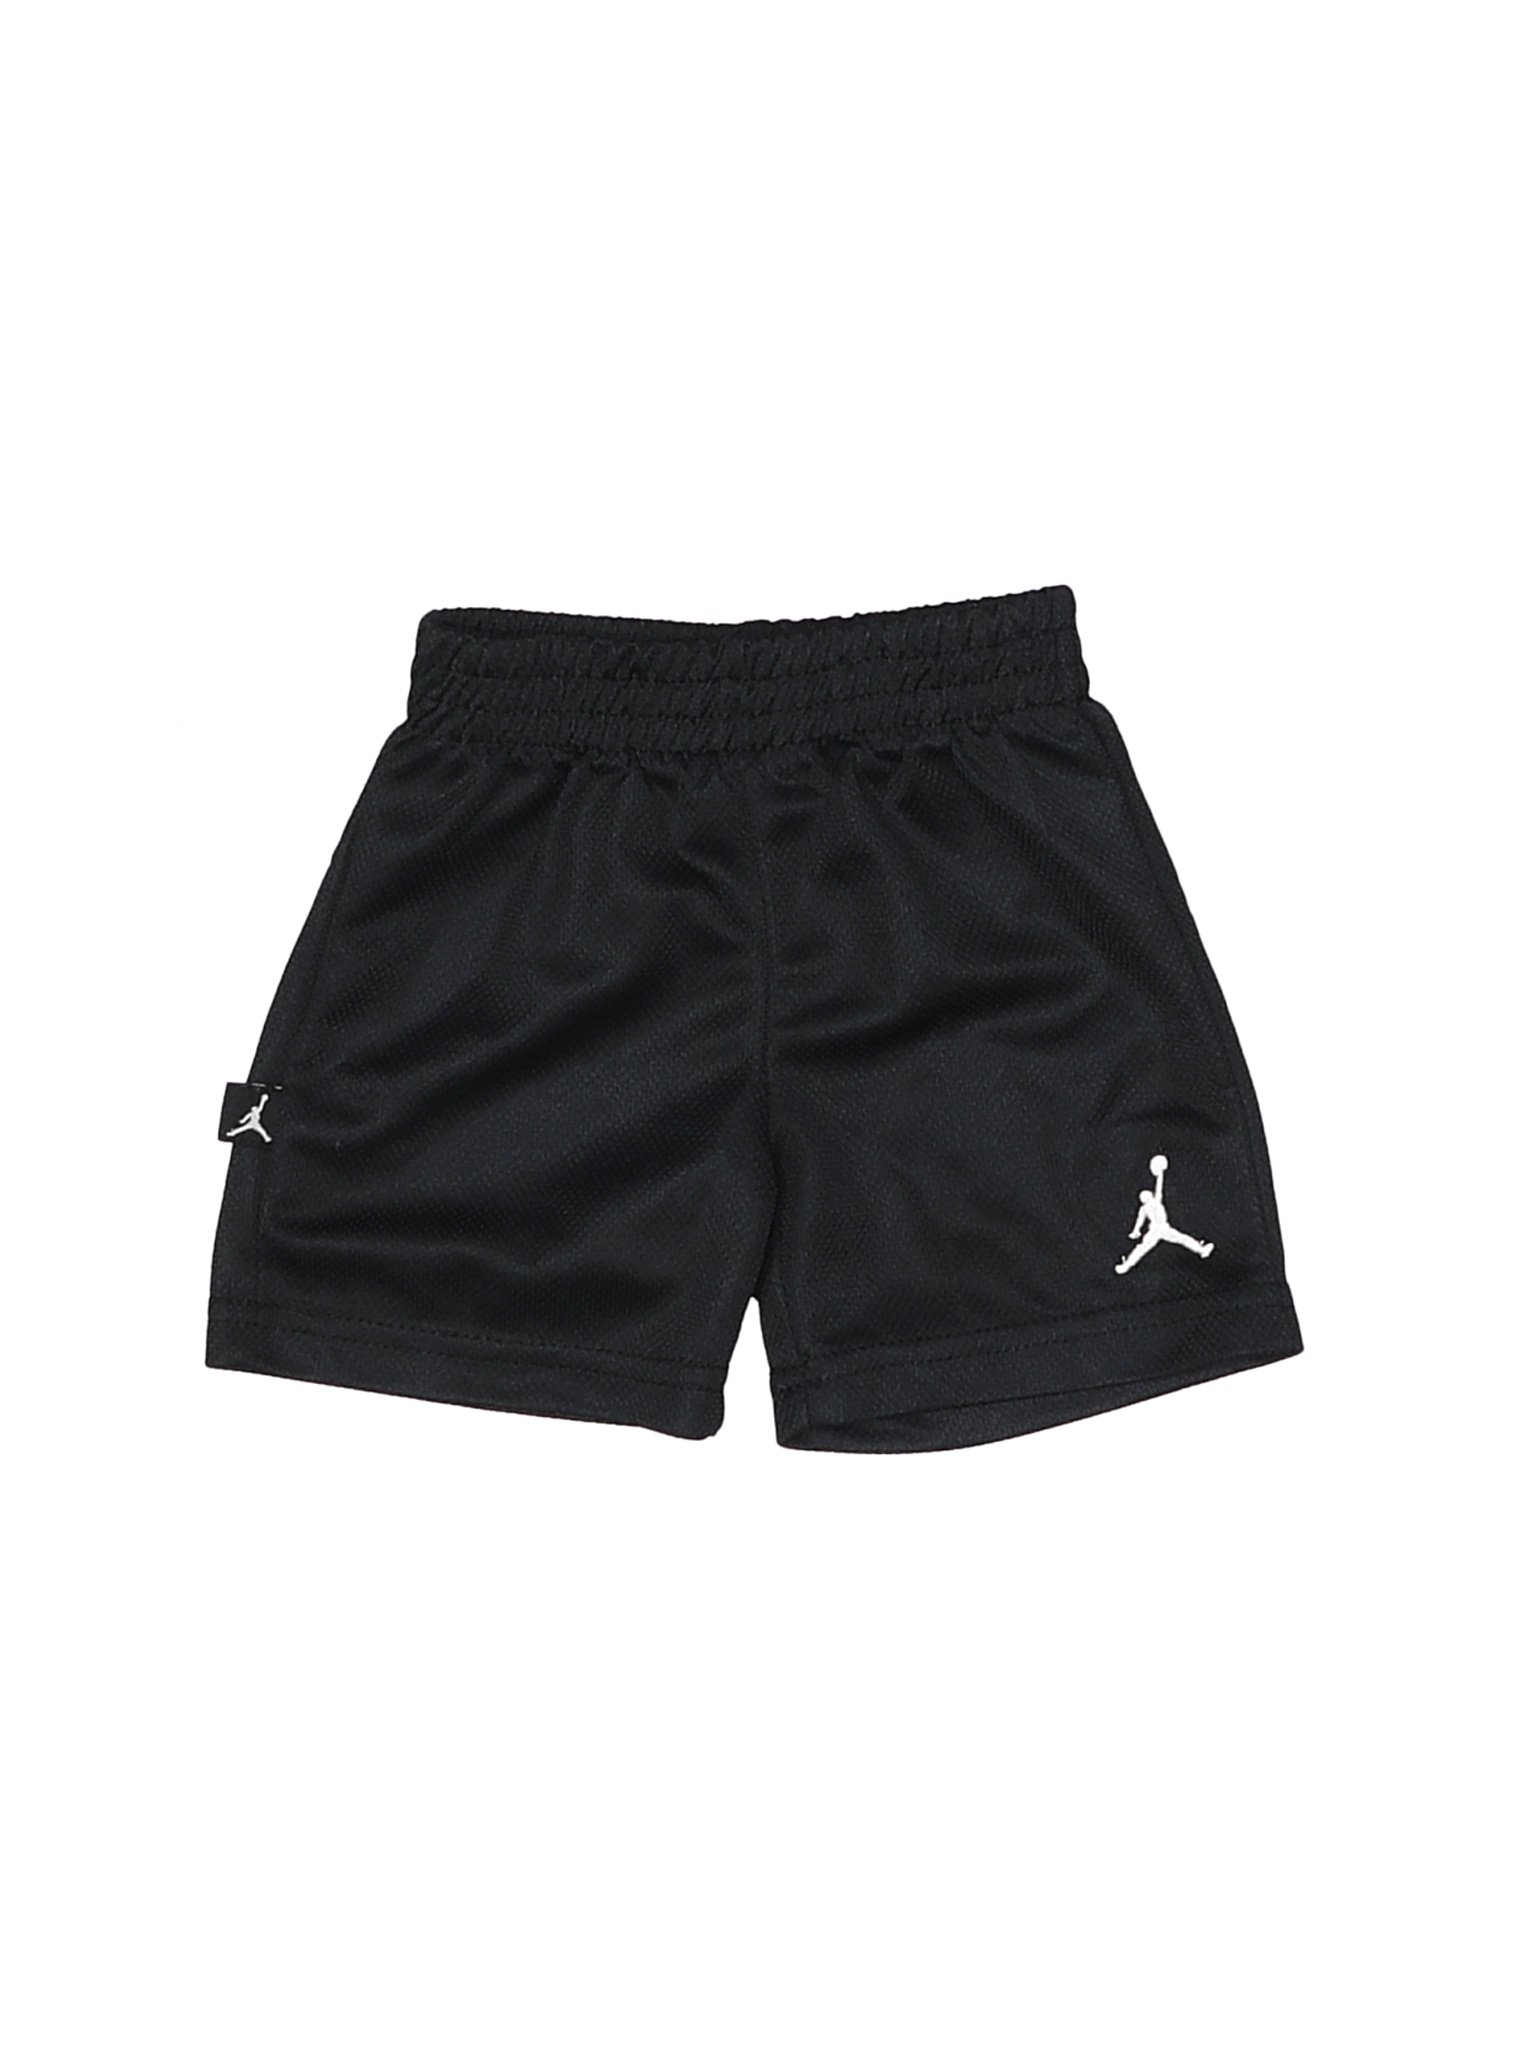 Air Jordan Boys Black Athletic Shorts 6-9 Months | eBay